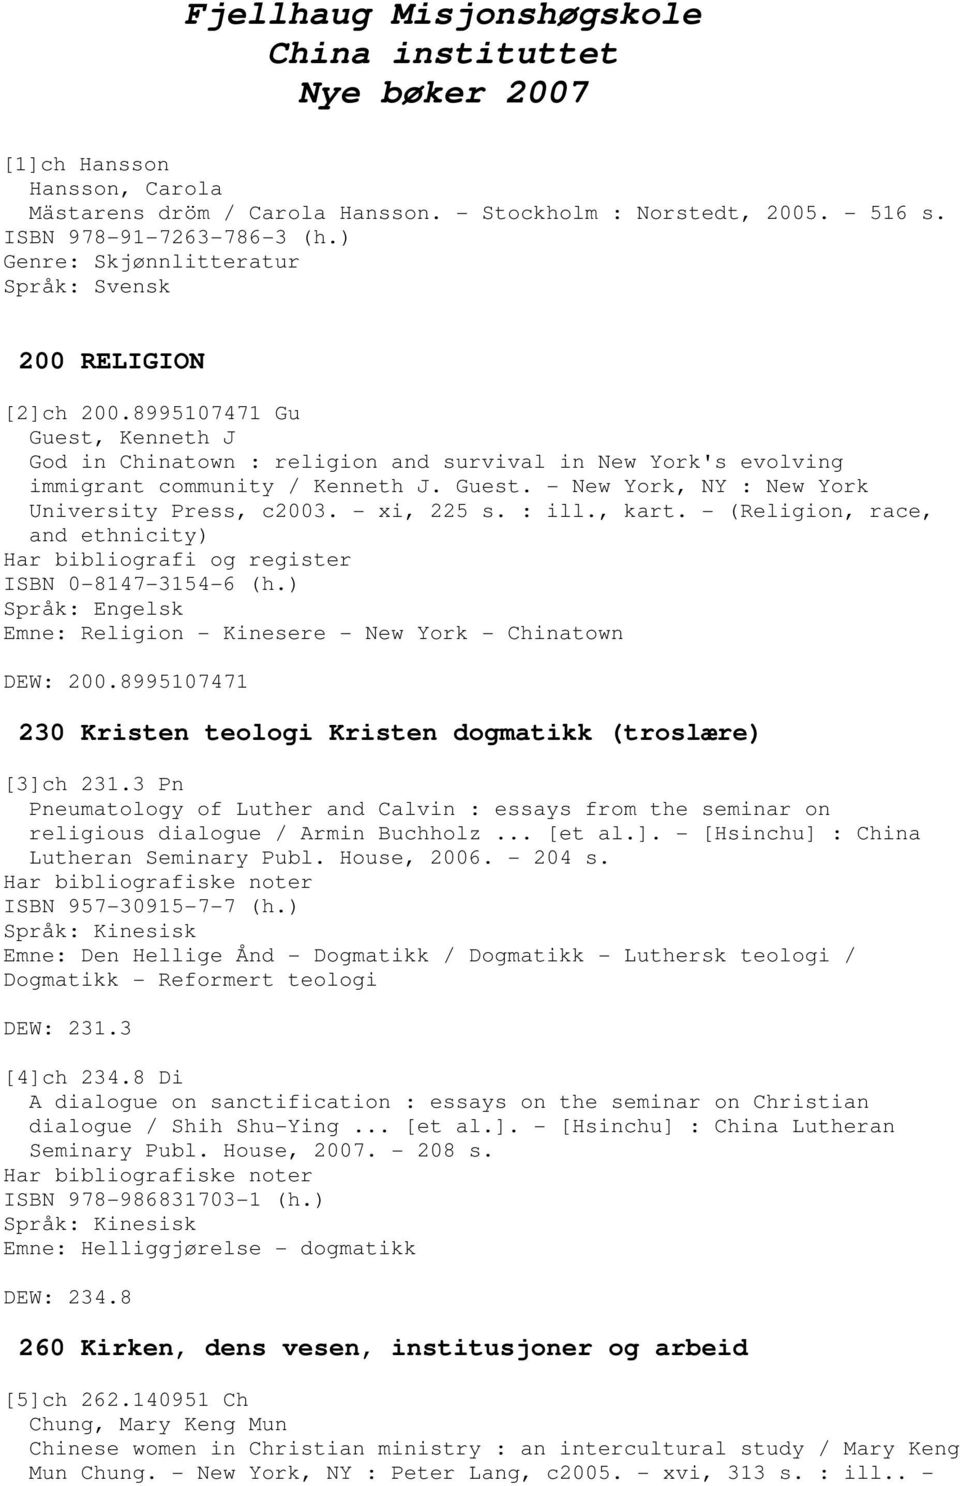 - xi, 225 s. : ill., kart. - (Religion, race, and ethnicity) Har bibliografi og register ISBN 0-8147-3154-6 (h.) Emne: Religion - Kinesere - New York - Chinatown DEW: 200.